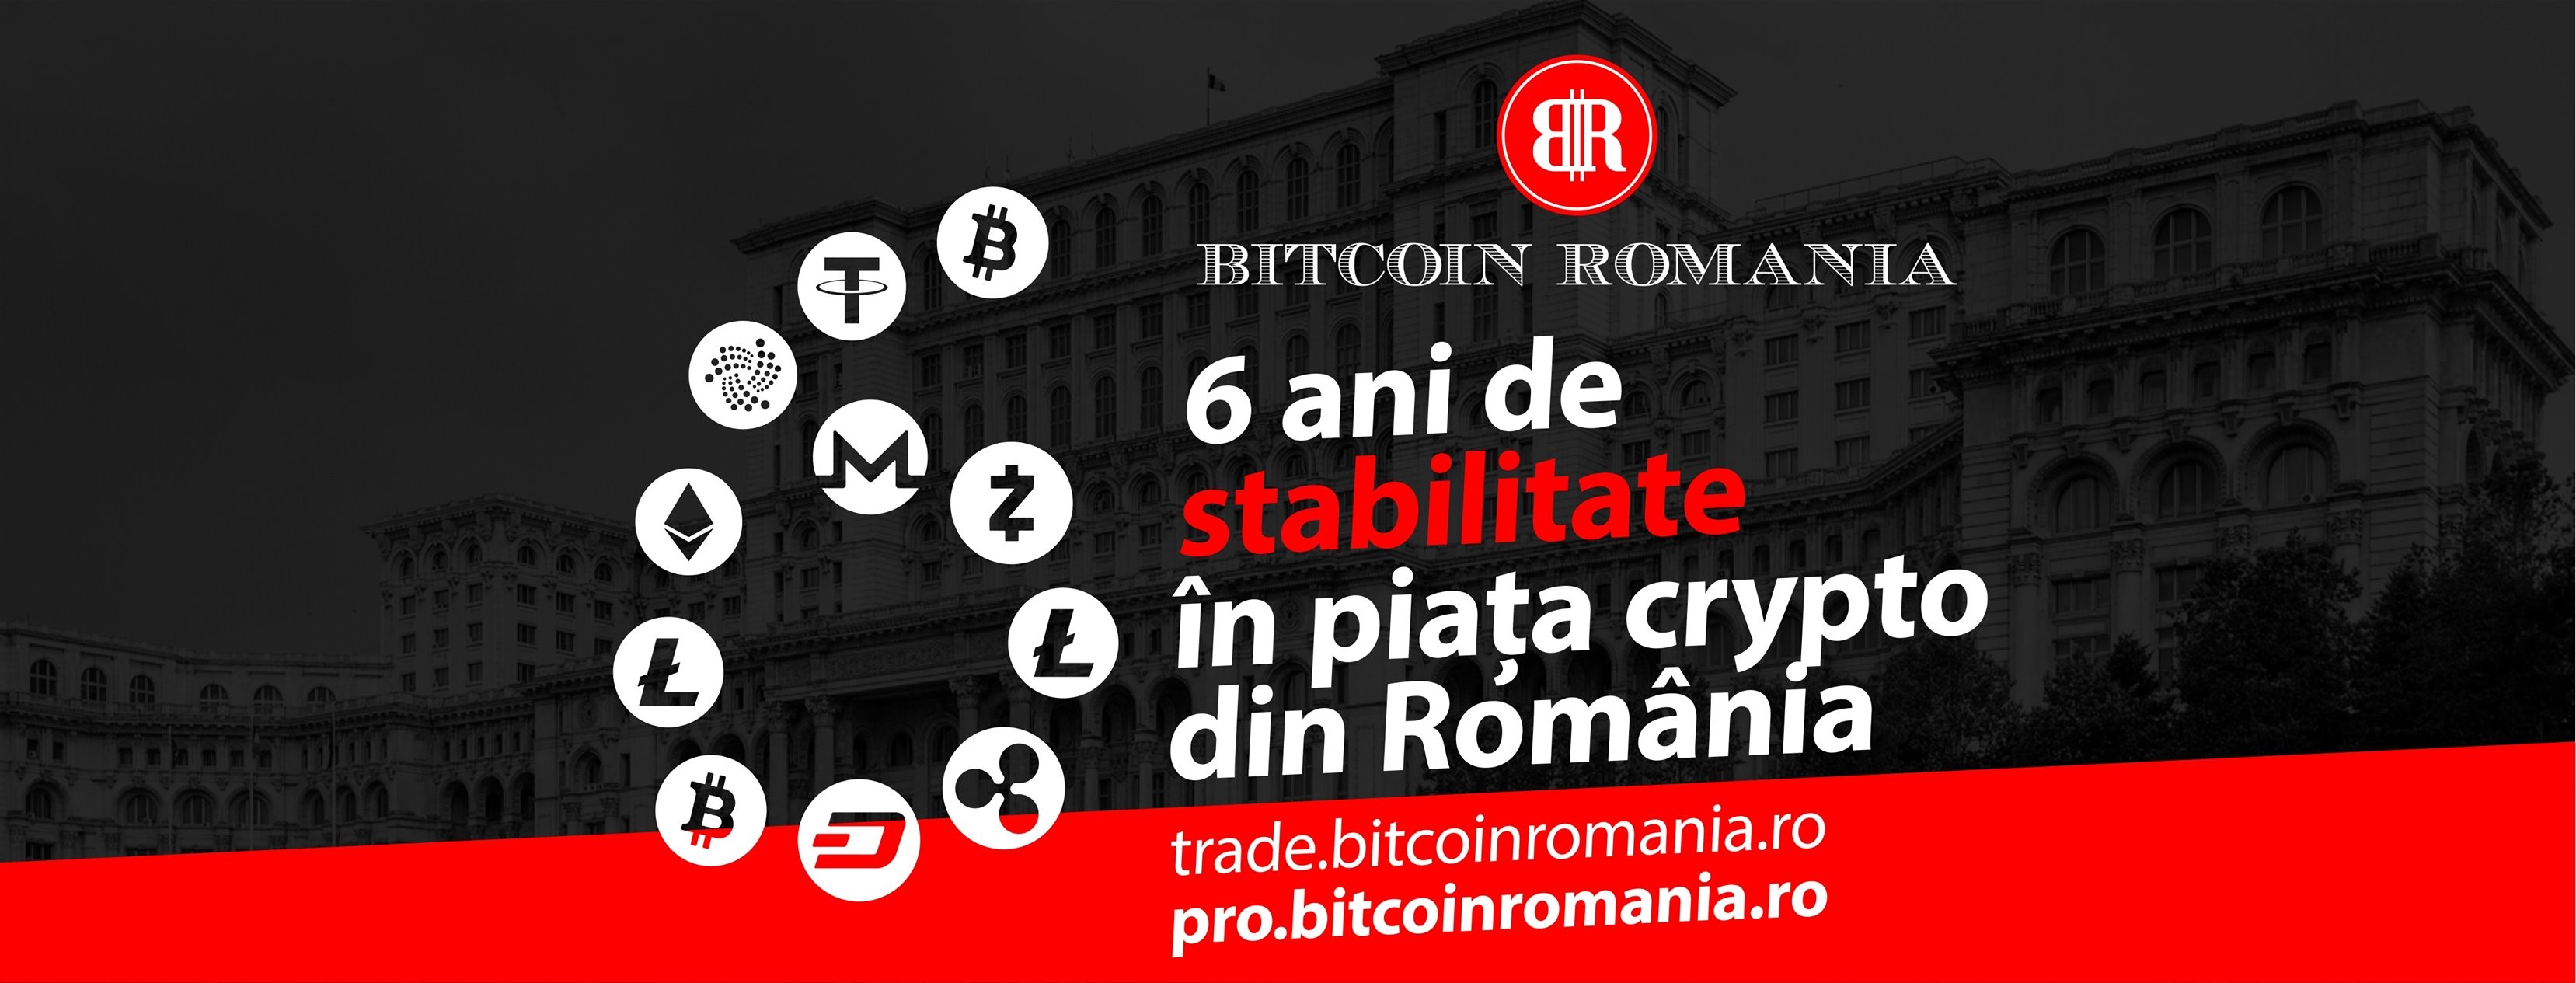 crypto trading románia